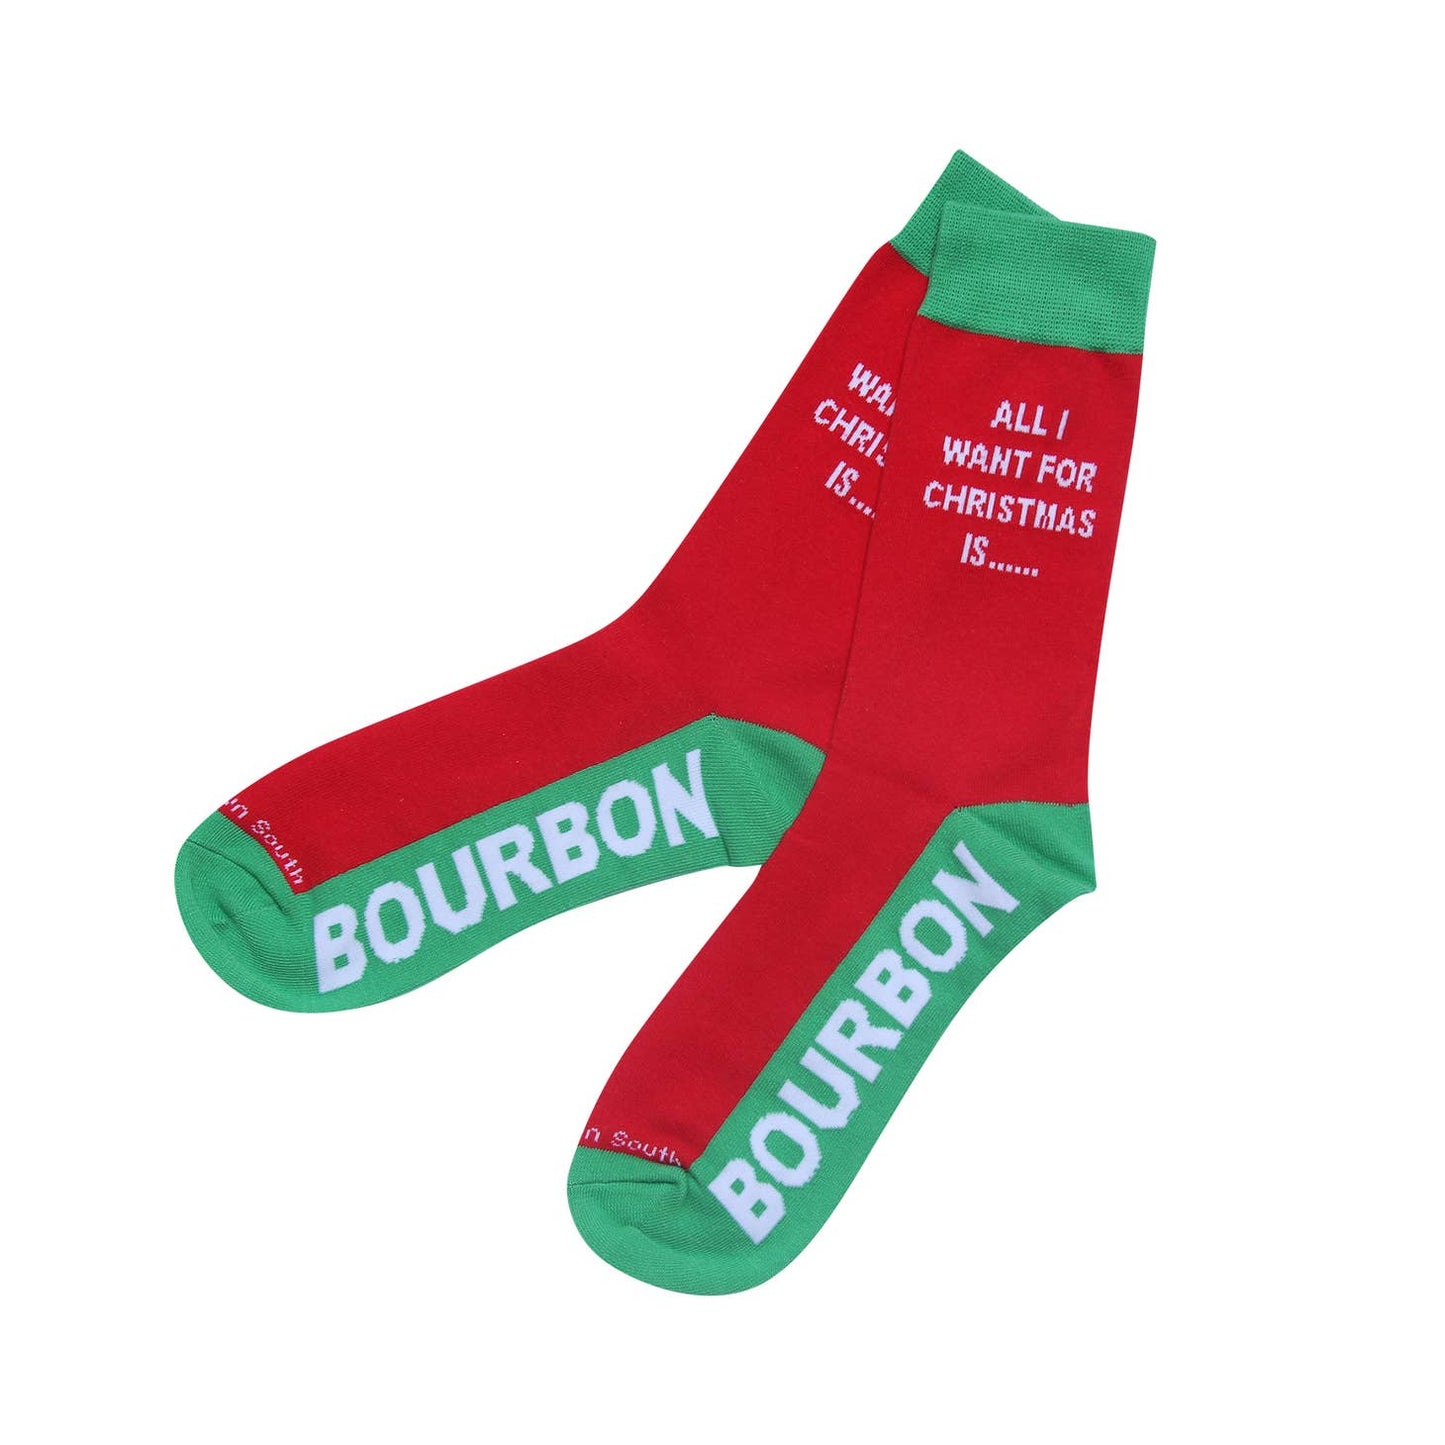 All I Want - Christmas Socks - Bourbon